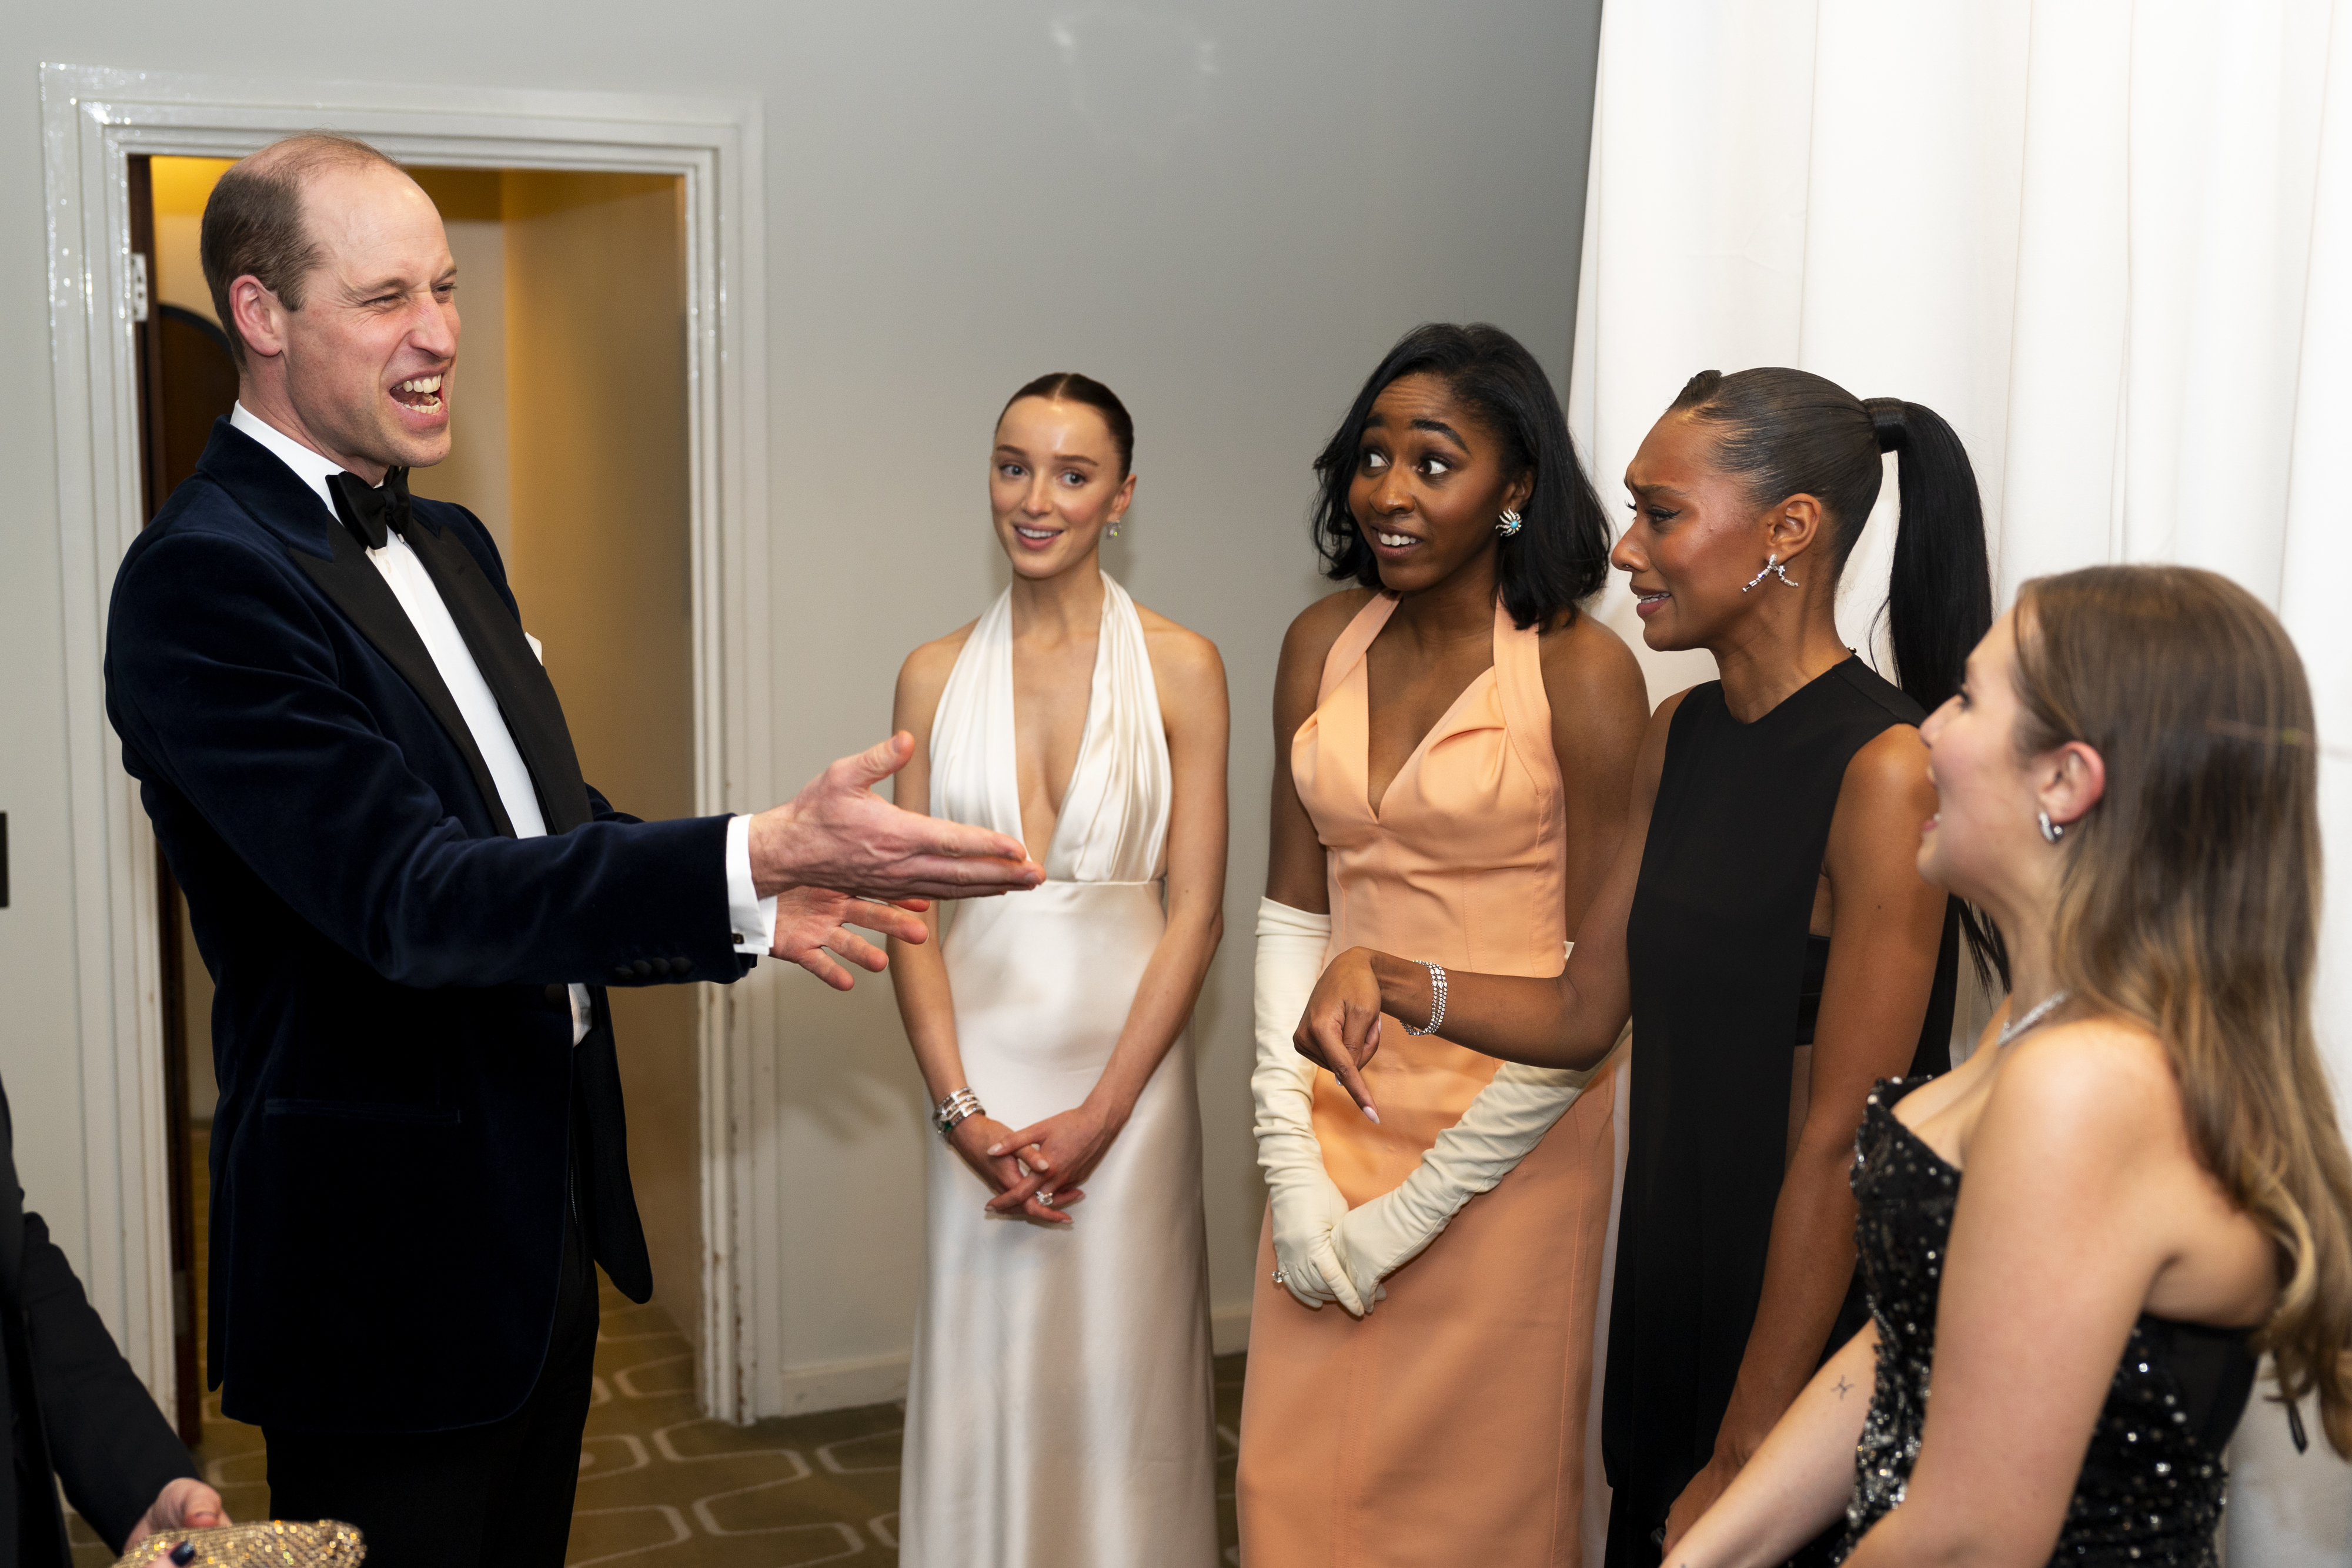 William, in a black tuxedo, speaks to the four women